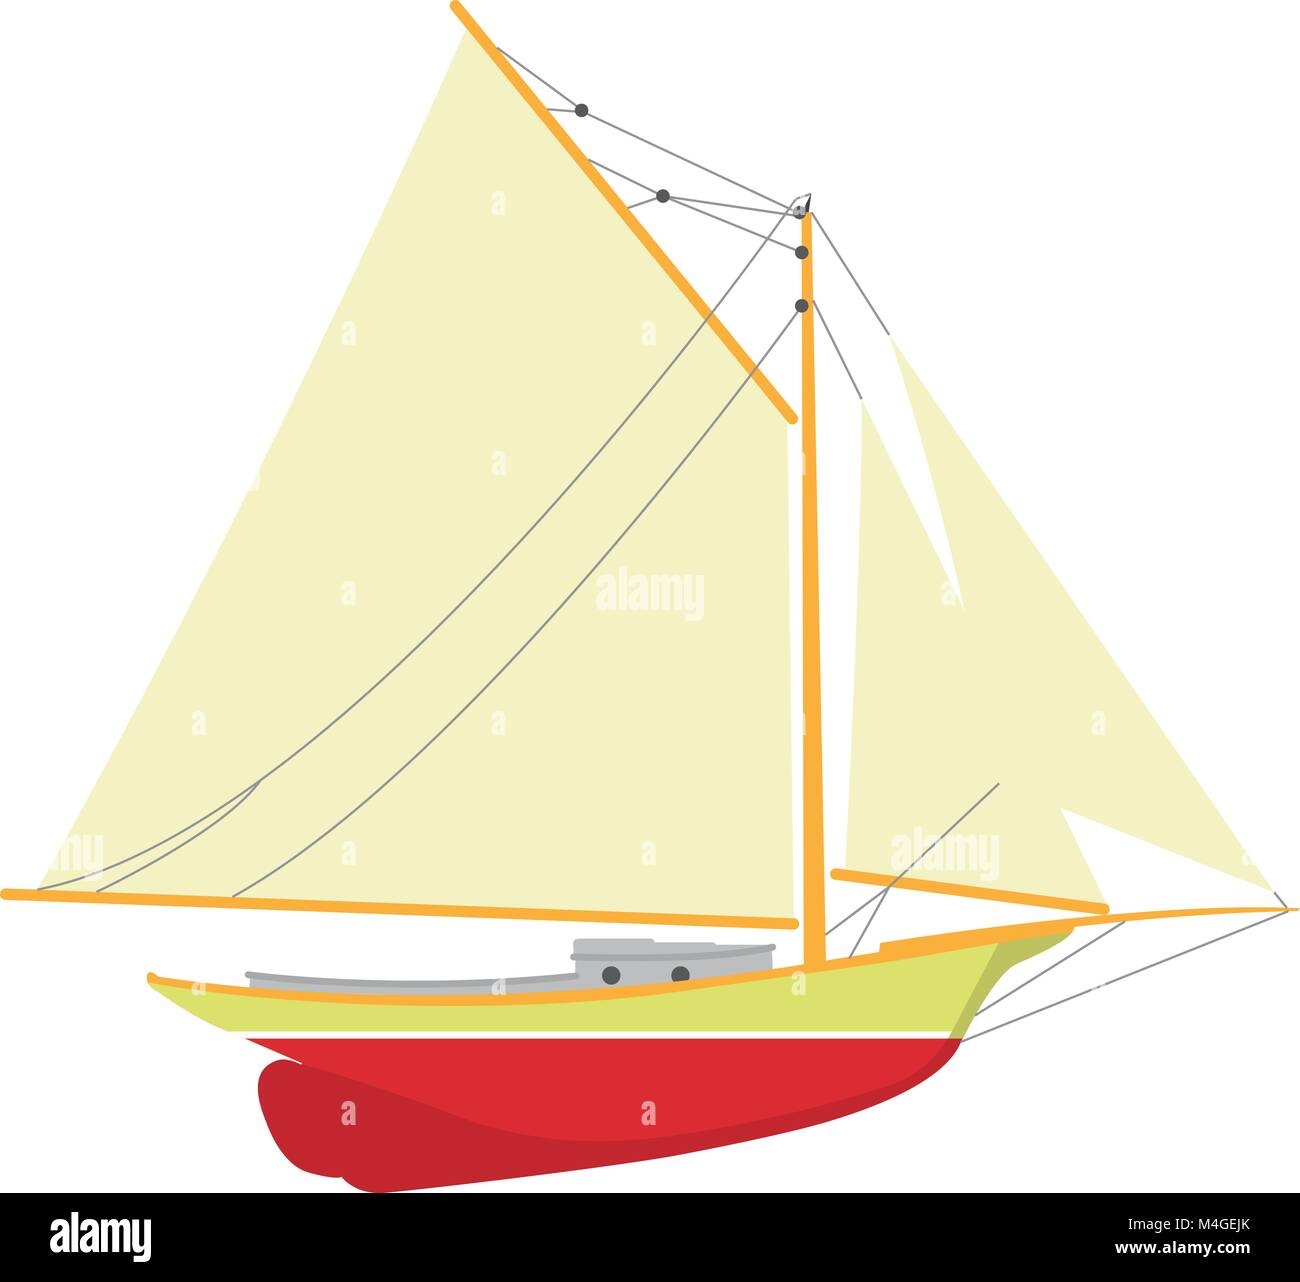 Velero o yate velero con vista lateral - fuera del agua Ilustración del Vector